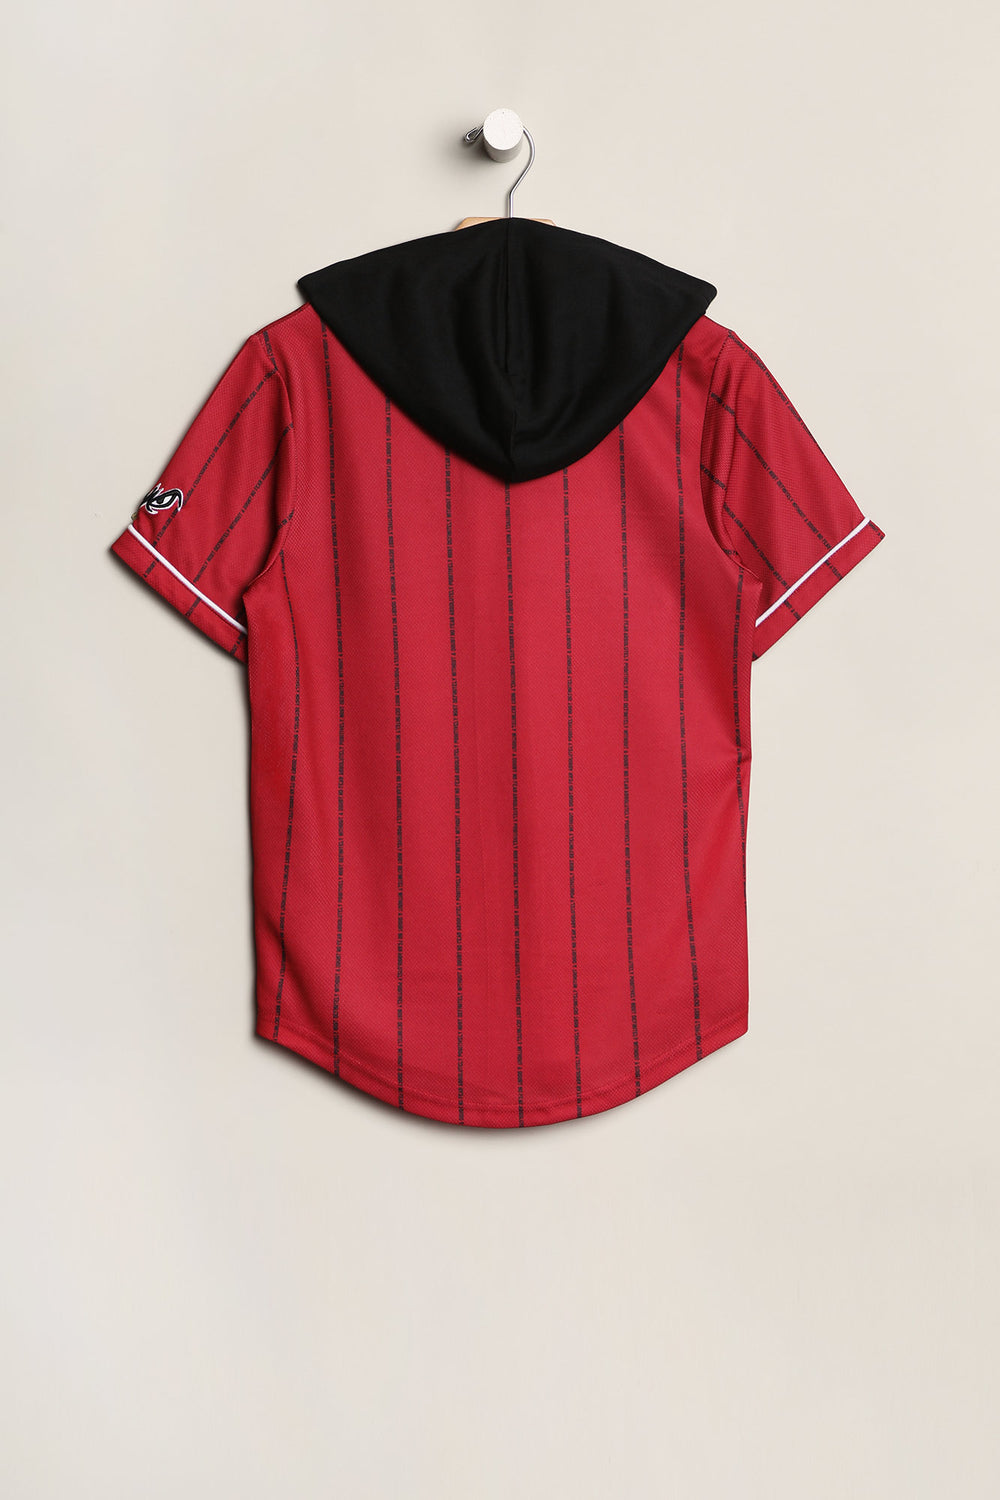 No Fear Baseball Jersey Shirt Size YOUTH Large Red #23